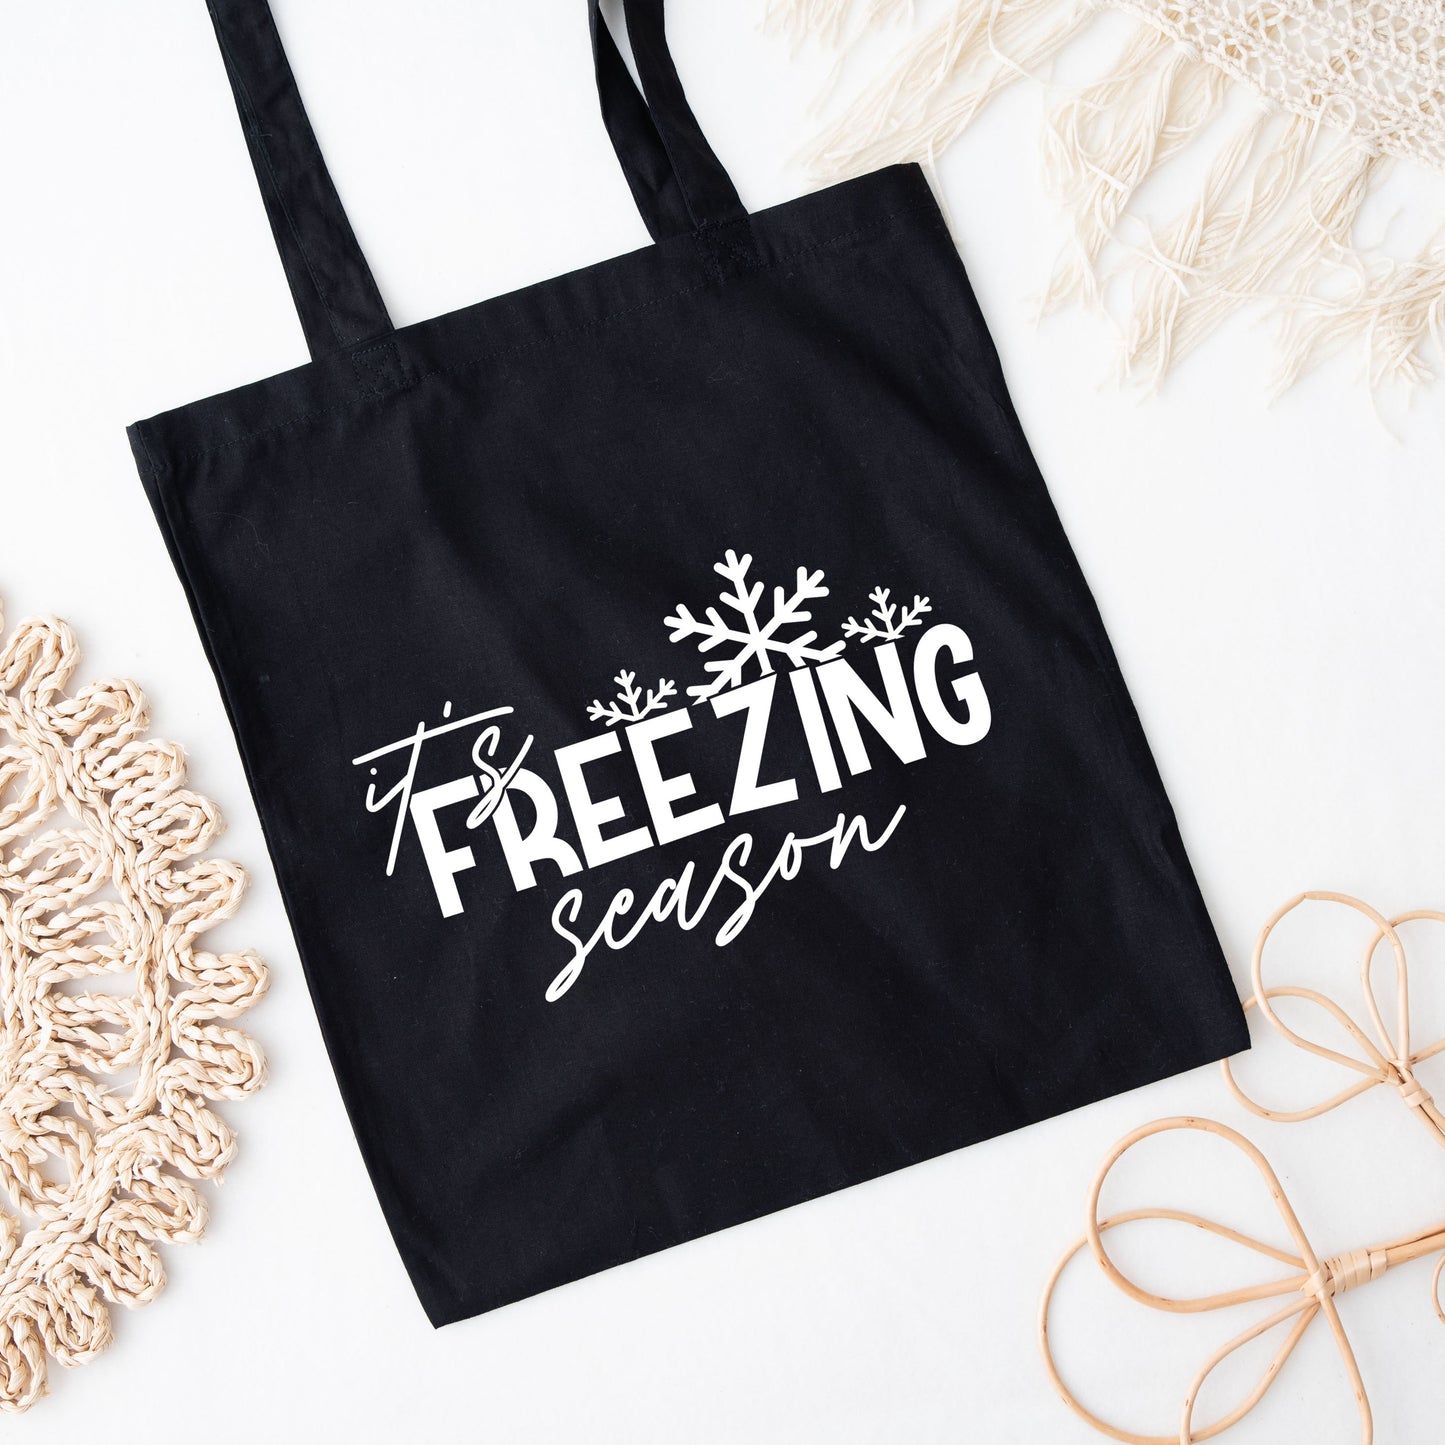 It's Freezing Season | Tote Bag